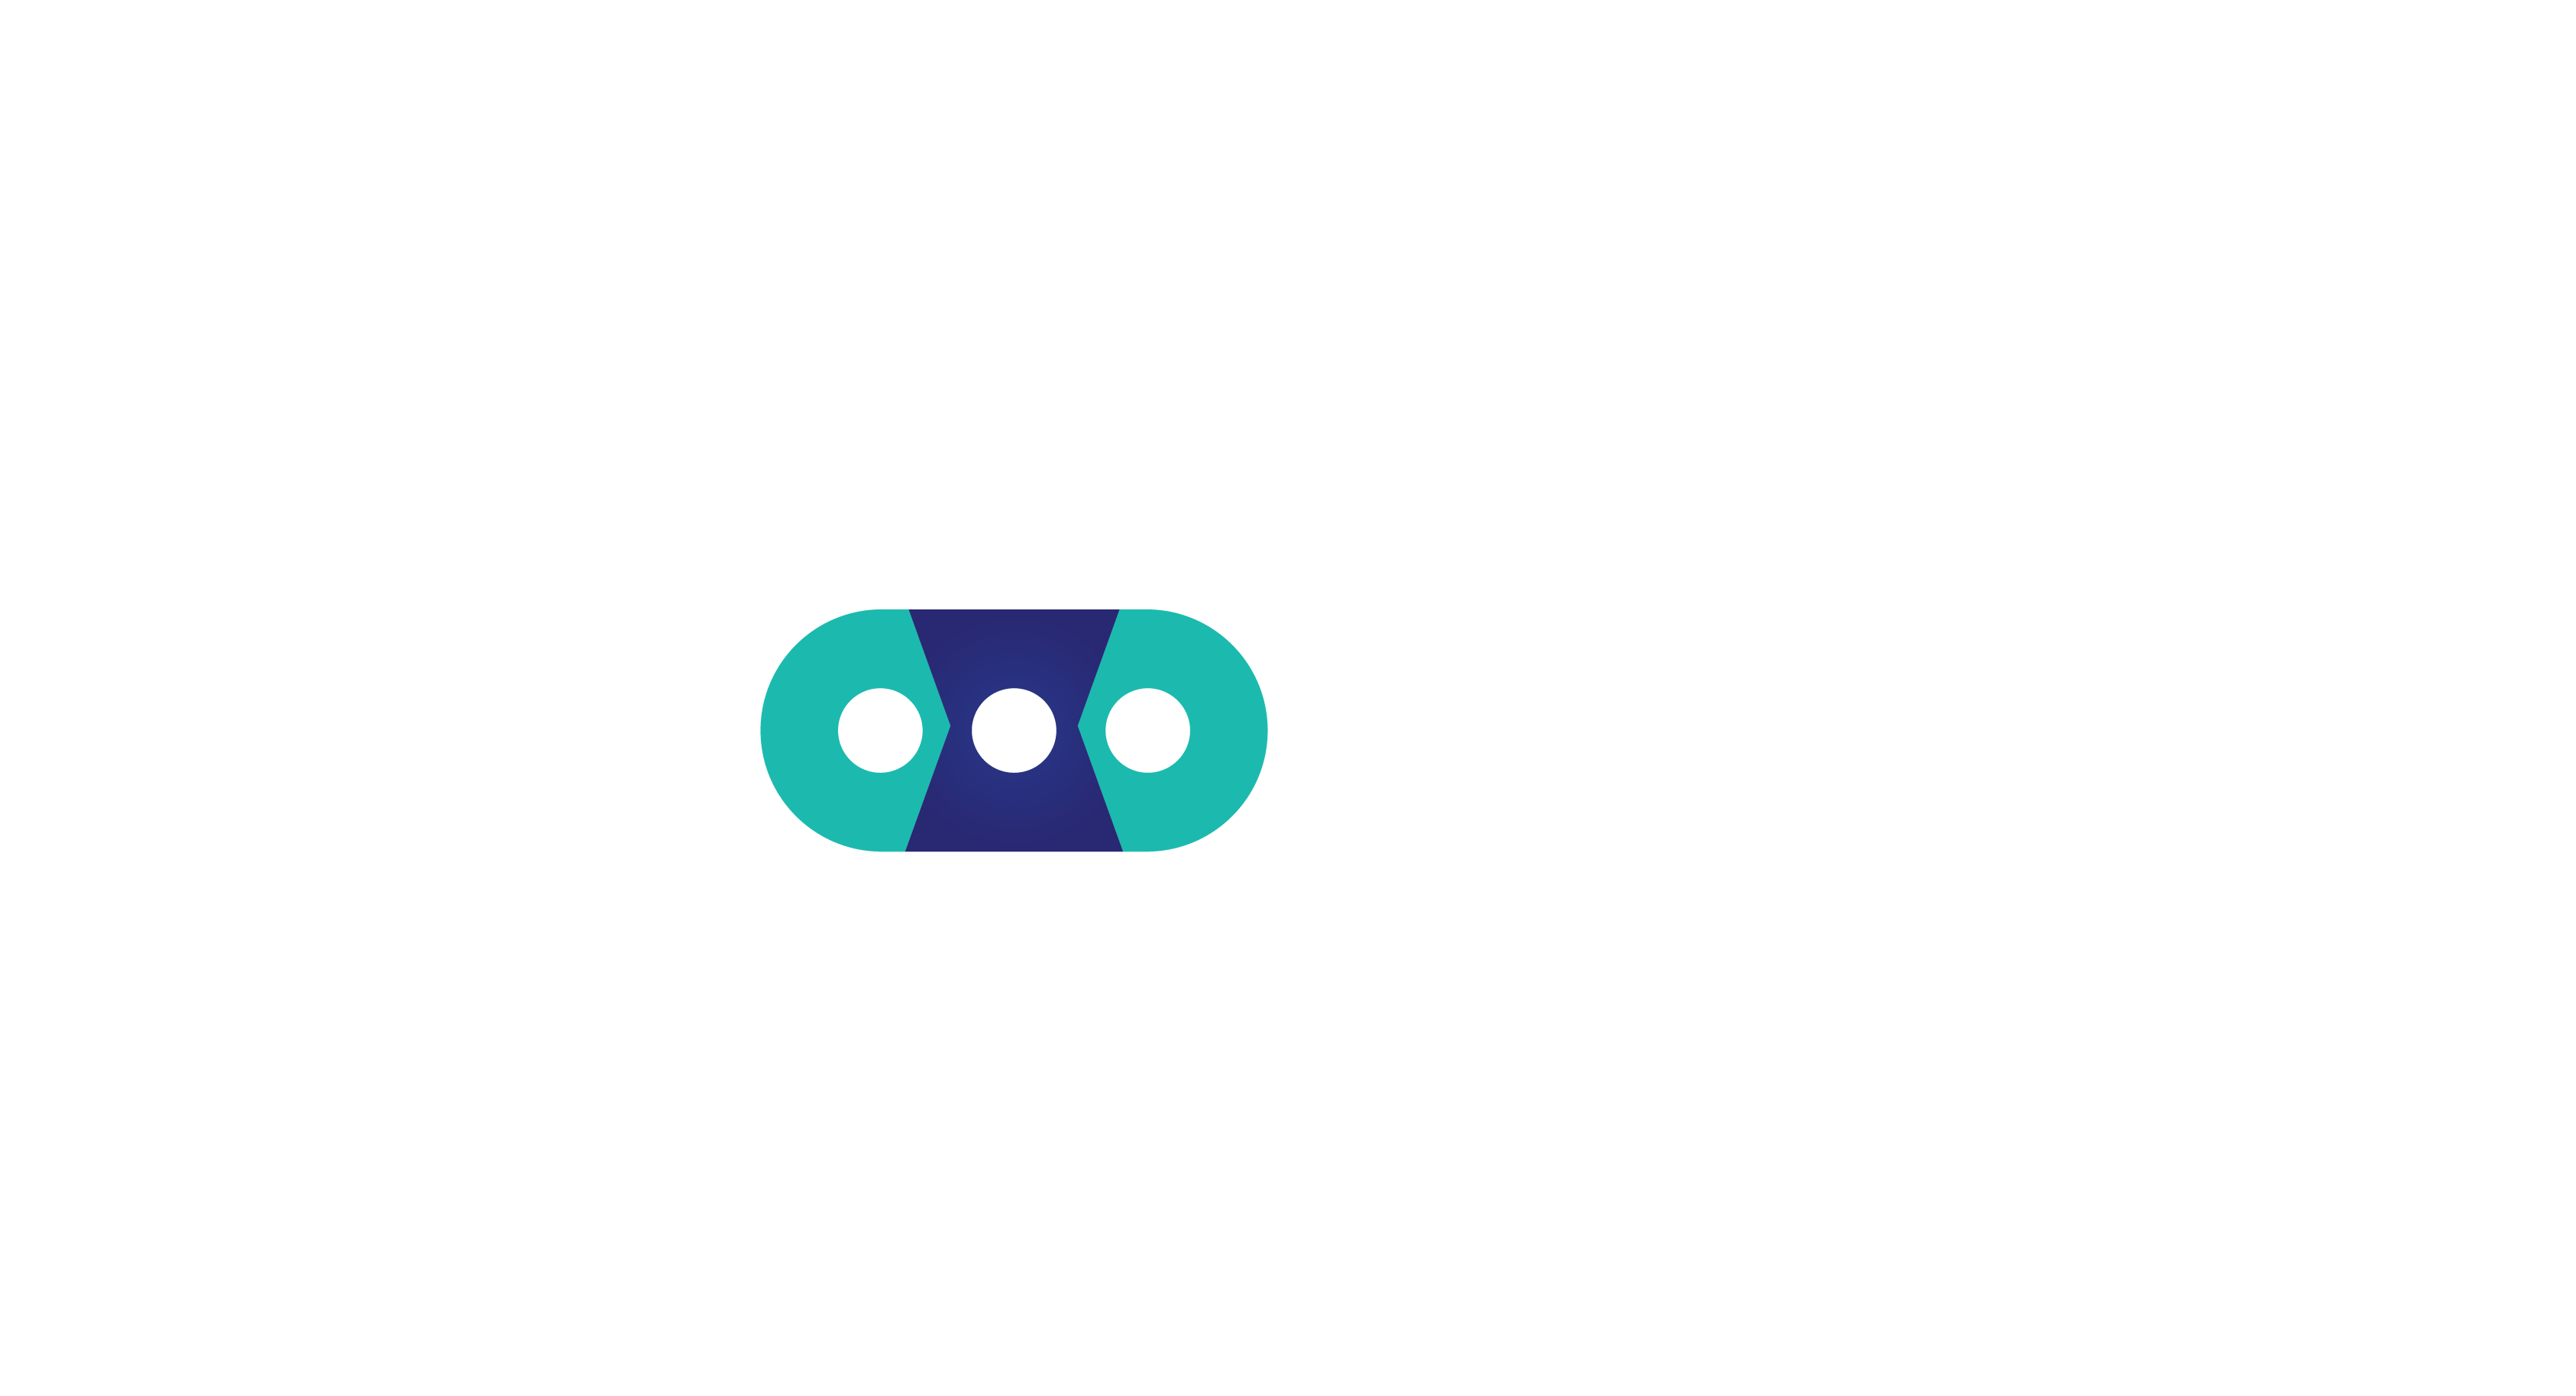 NIX the TEXT